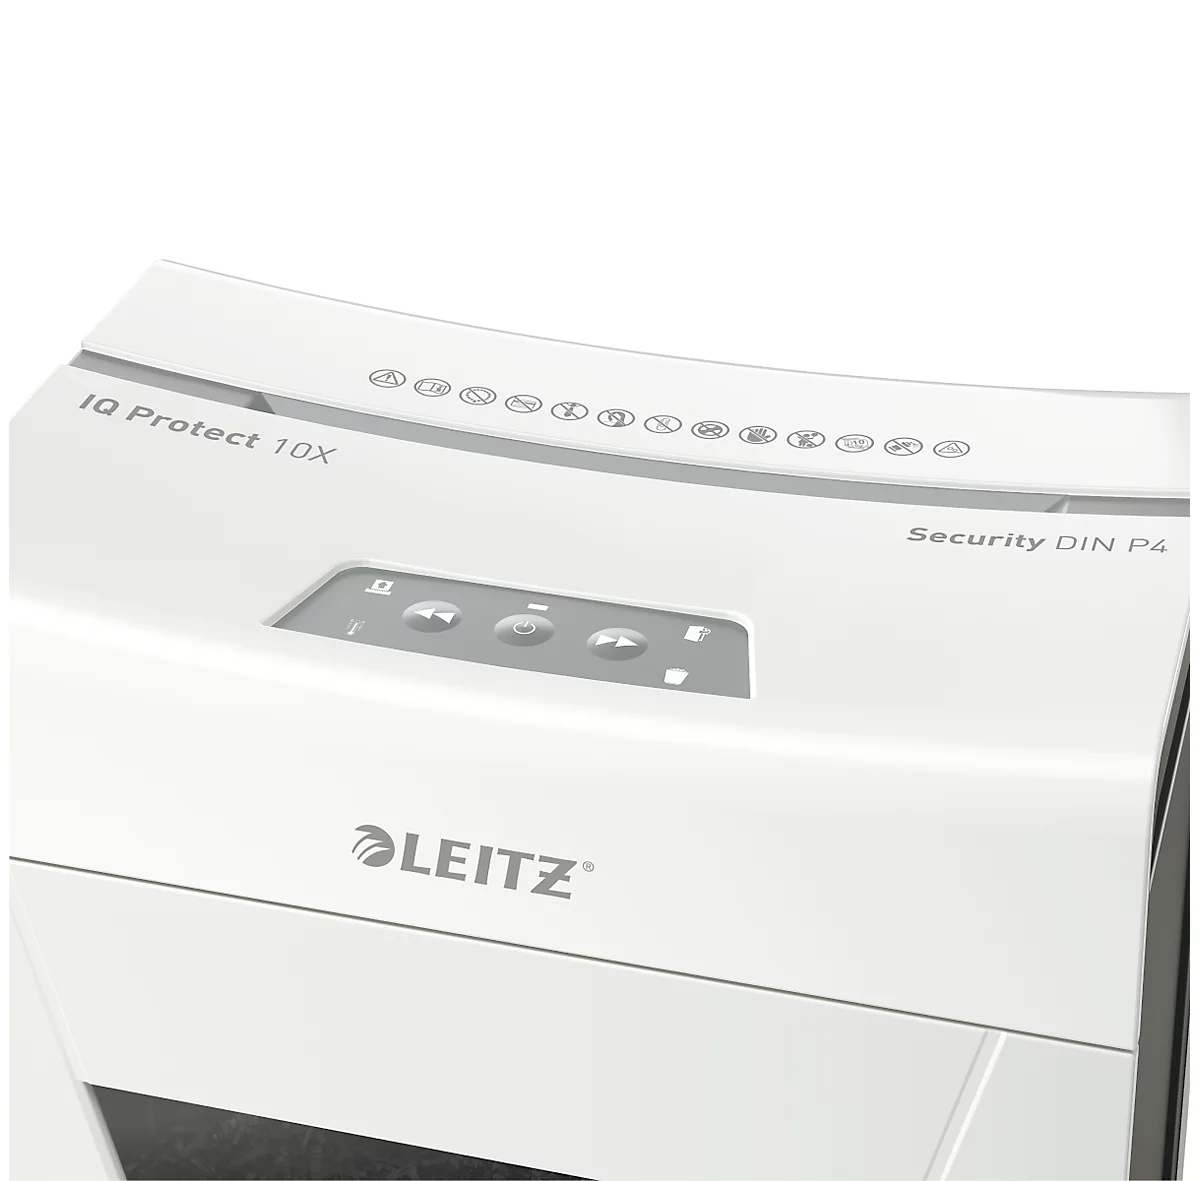 Leitz IQ 10X Protect Premium papiervernietiger P4, deeltjes 4 x 40 mm, 18 l, 10 vel snijcapaciteit, anti-papierstoringstechnologie, wit